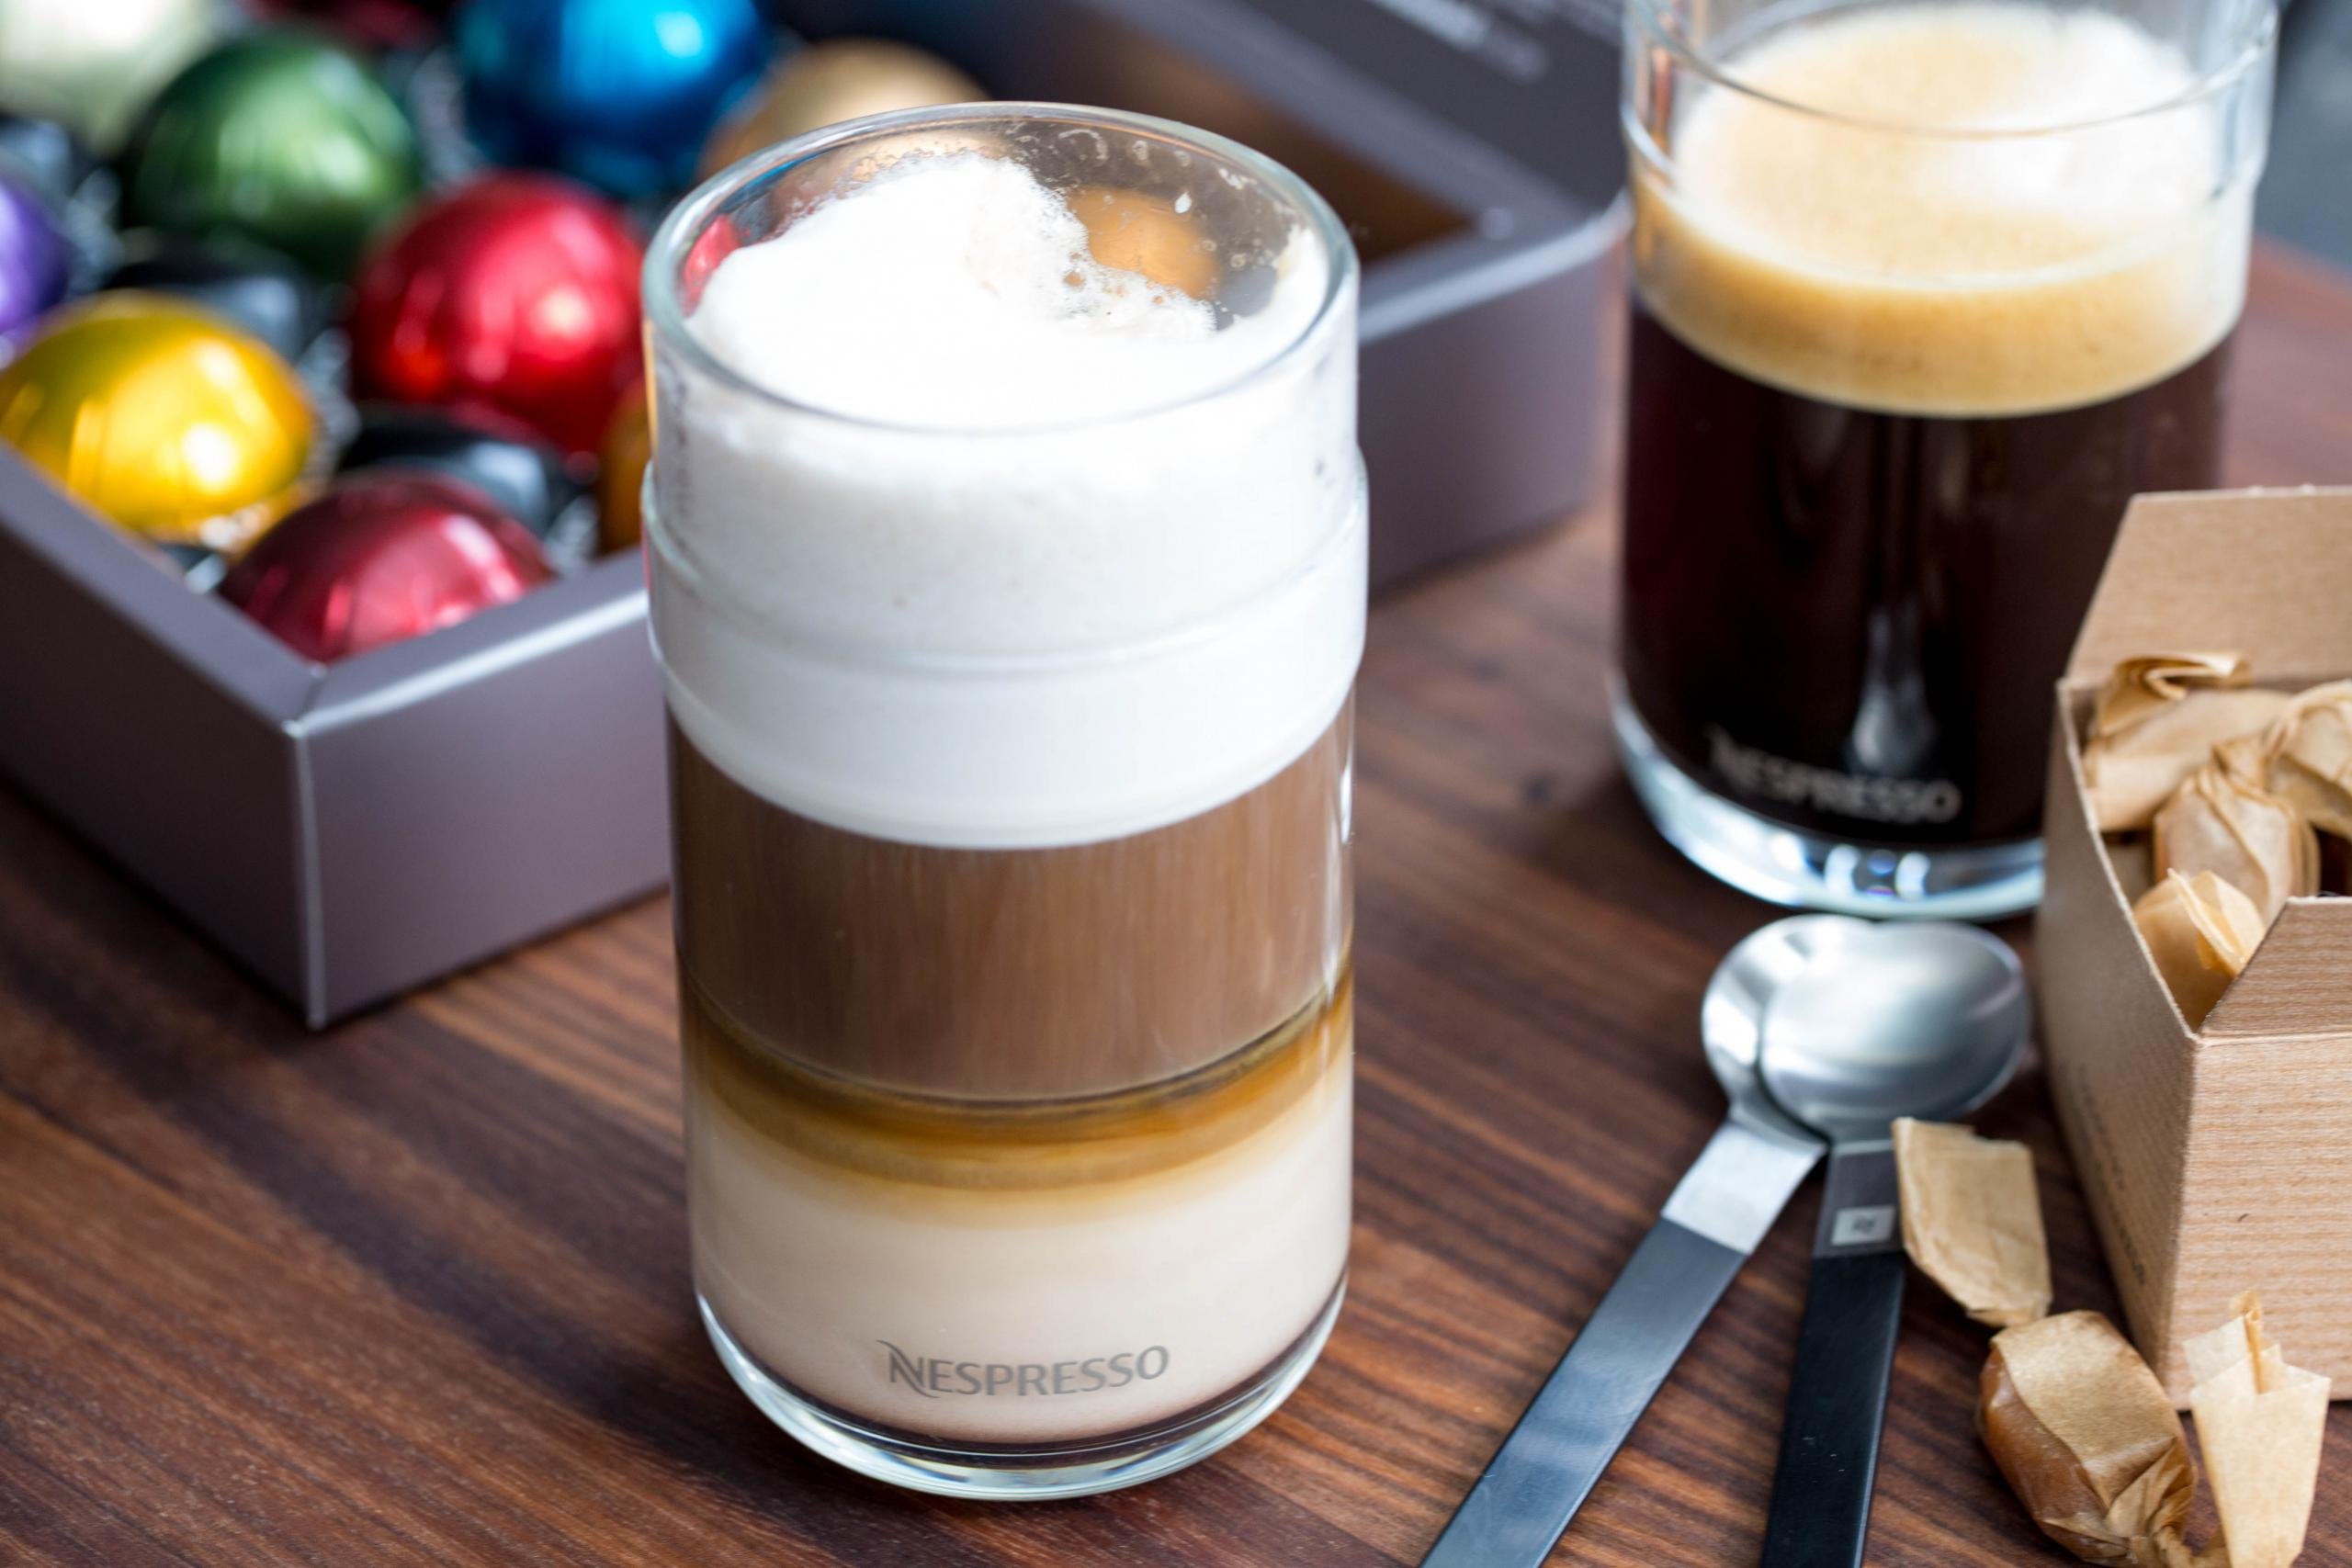 Latte with Nespresso (Caramel and Chocolate) - Momsdish